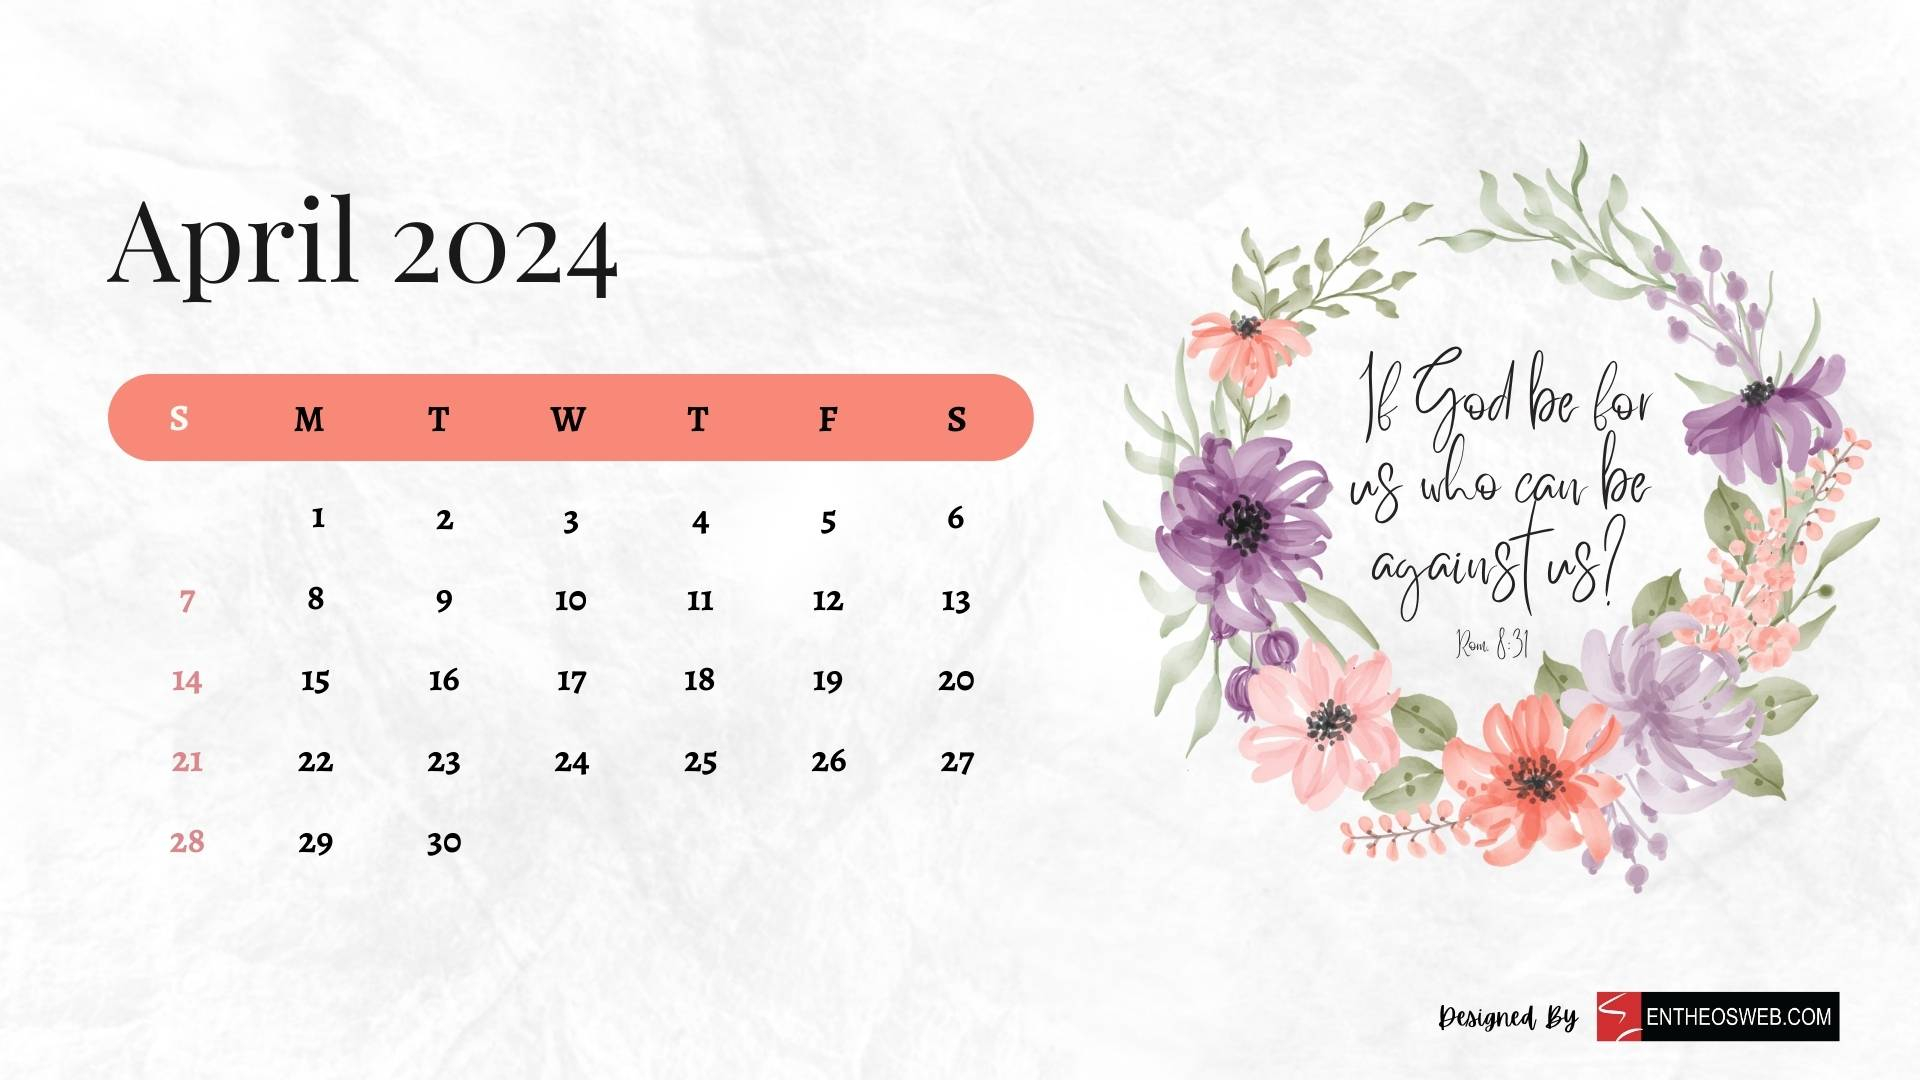 2024 Christian Calendar Wallpaper | Entheosweb in April Calendar 2024 Wallpaper